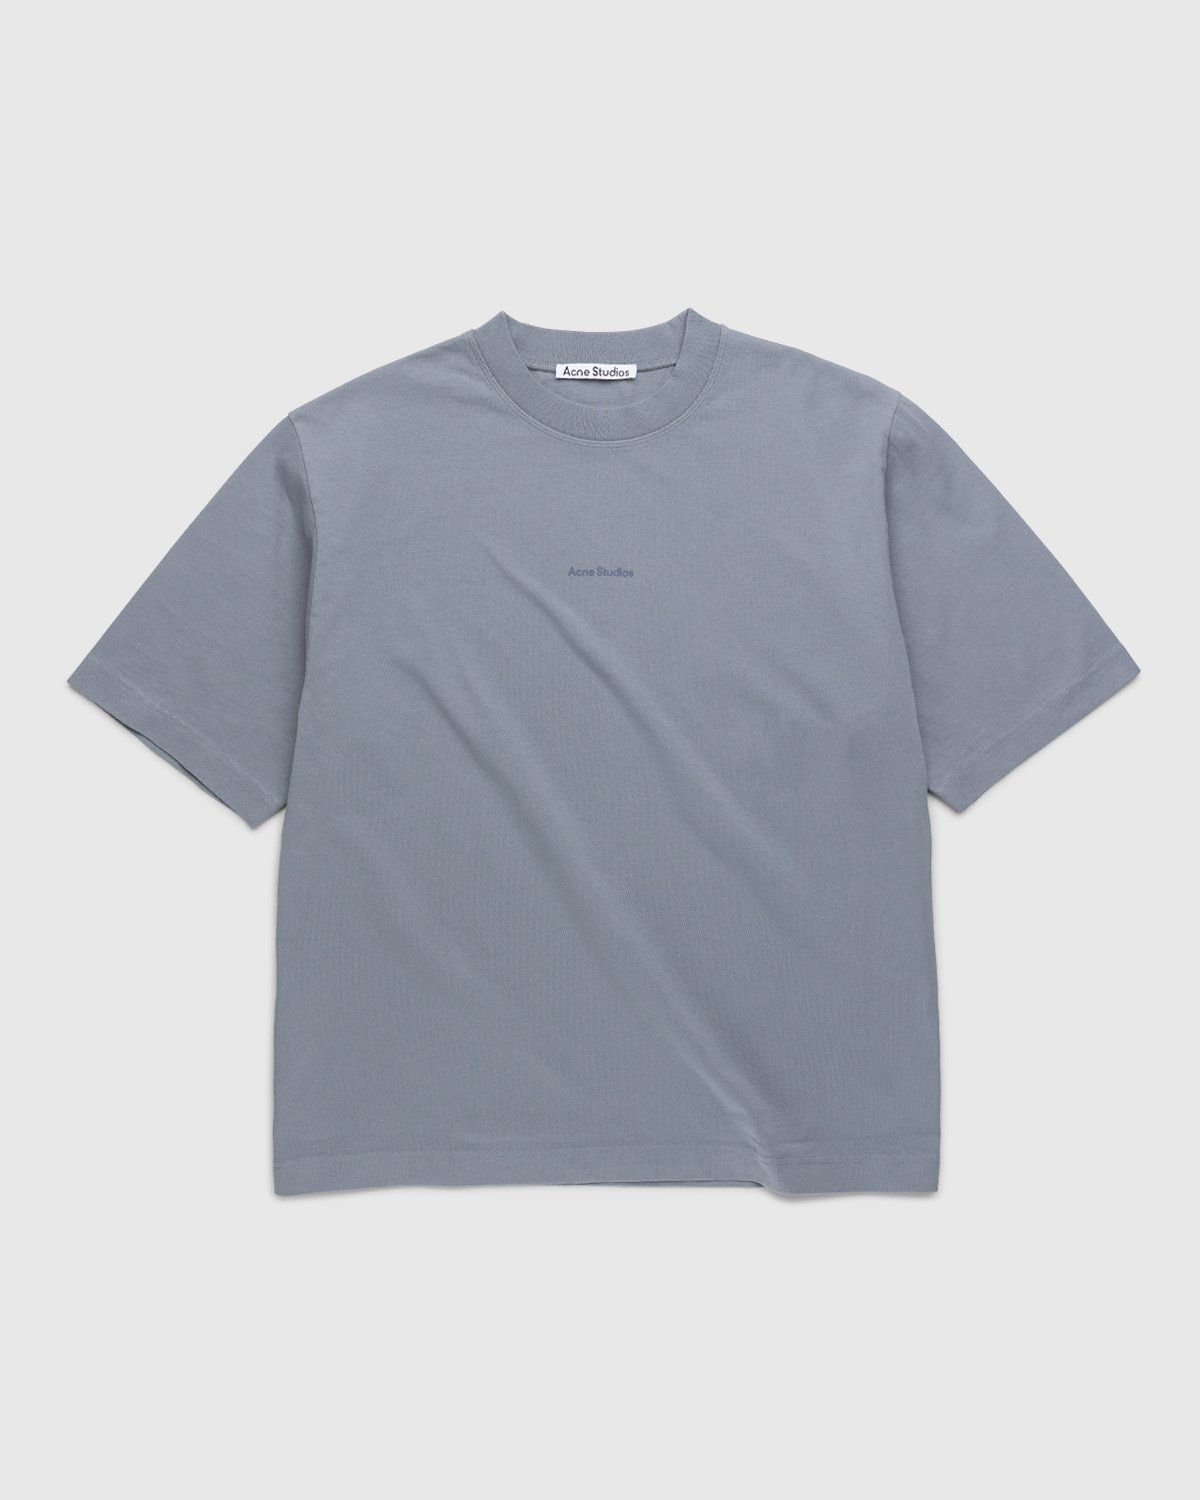 Acne Studios – Logo T-Shirt Steel Grey - Image 1